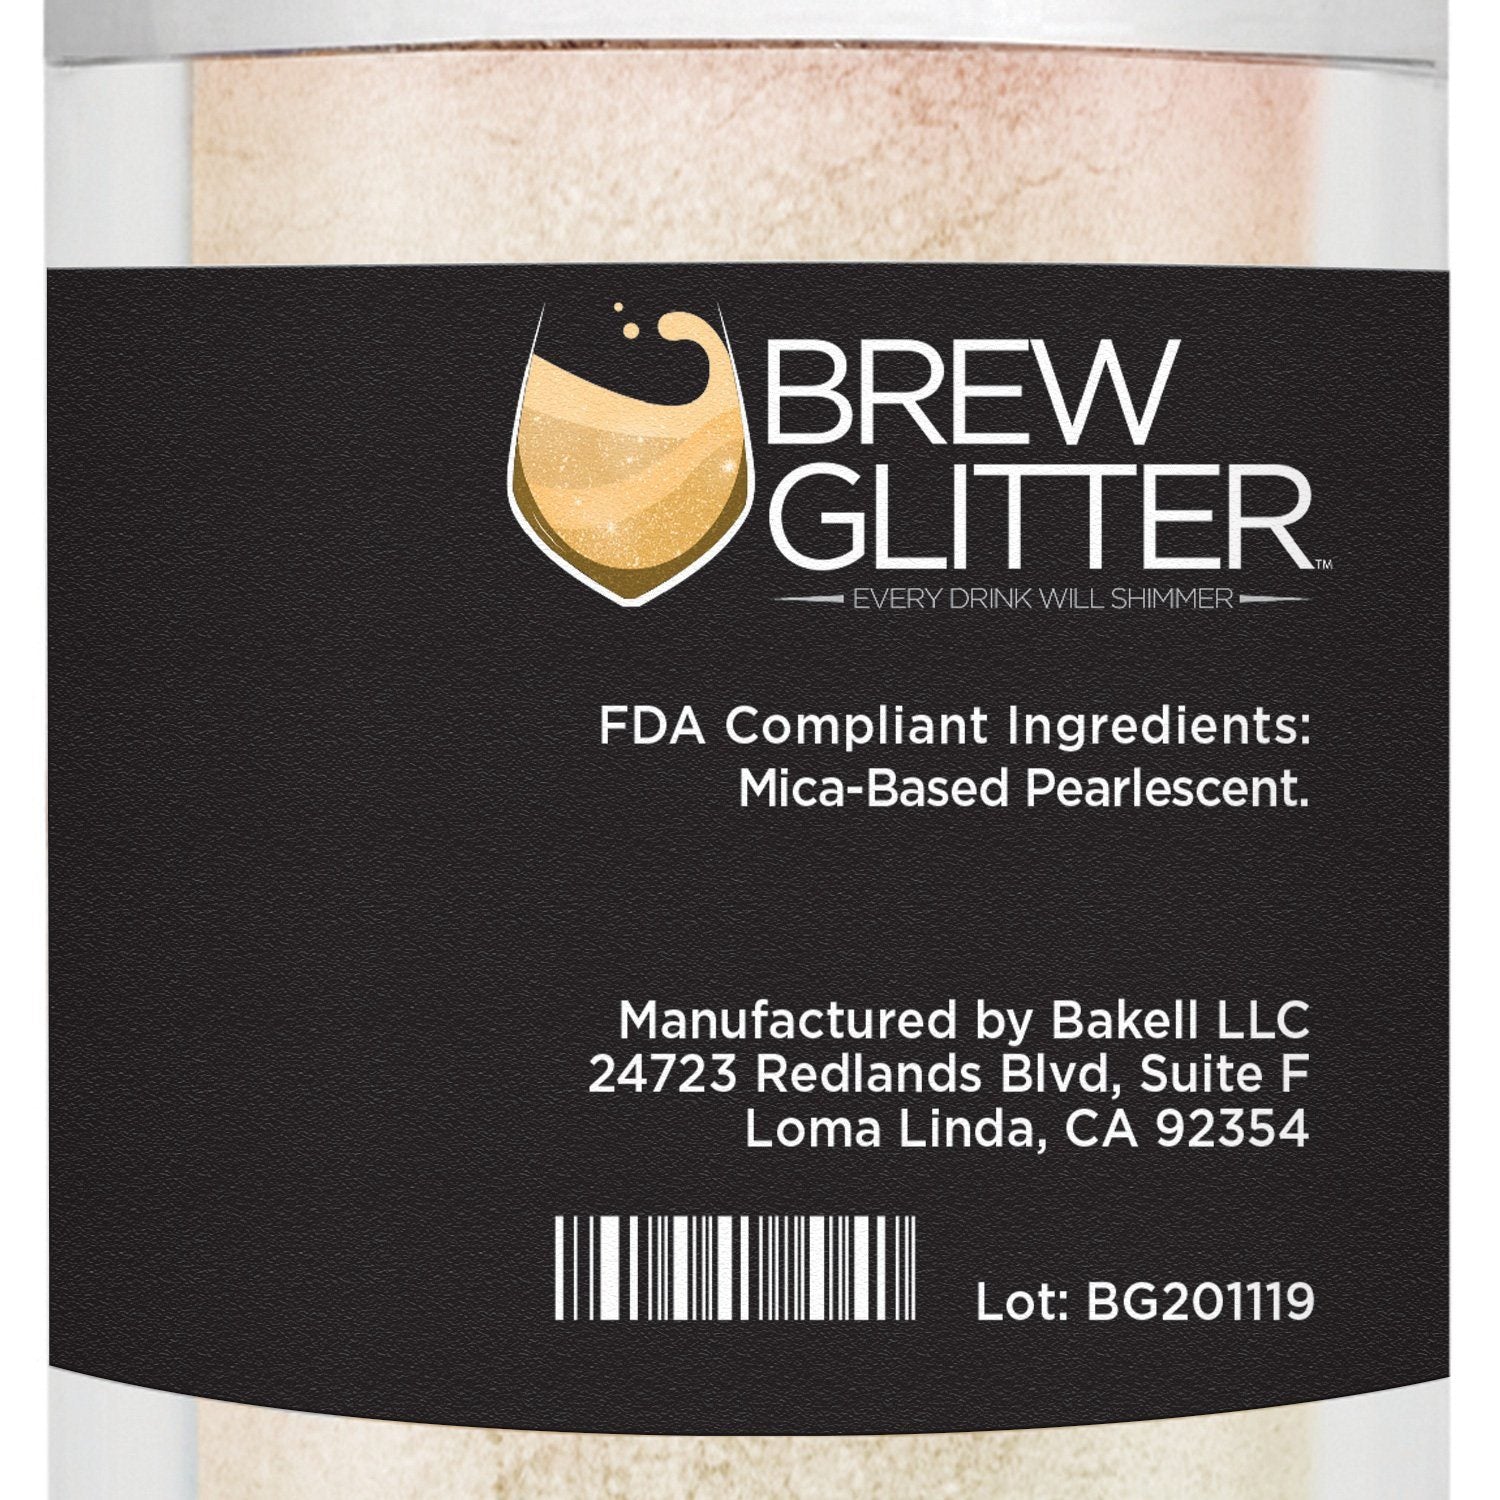 Pink Iridescent Brew Glitter | Iced Tea Glitter-Brew Glitter®